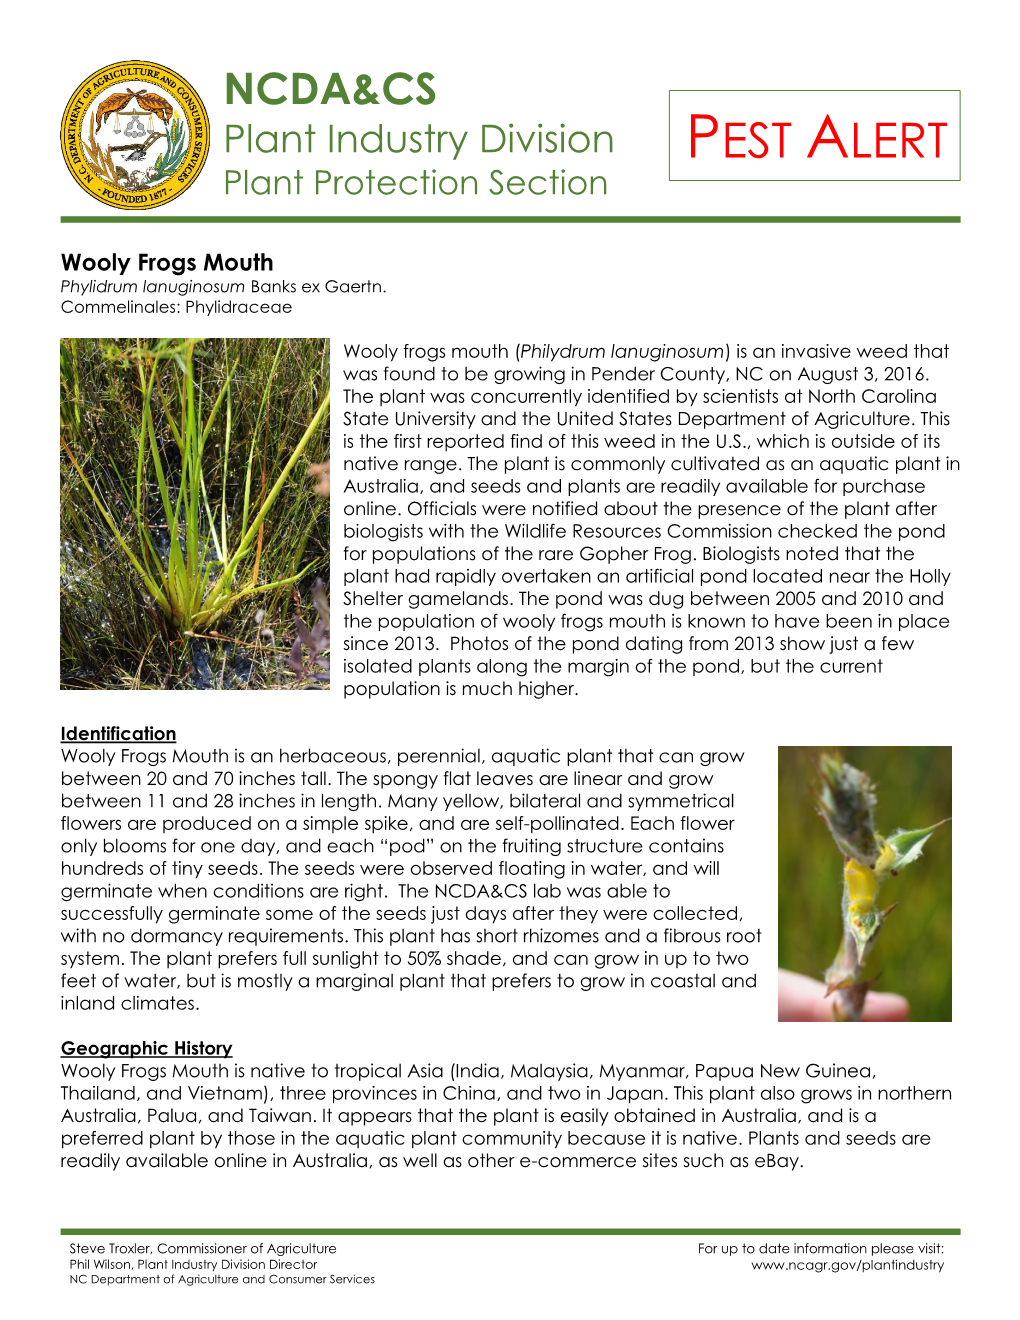 PEST ALERT Plant Protection Section